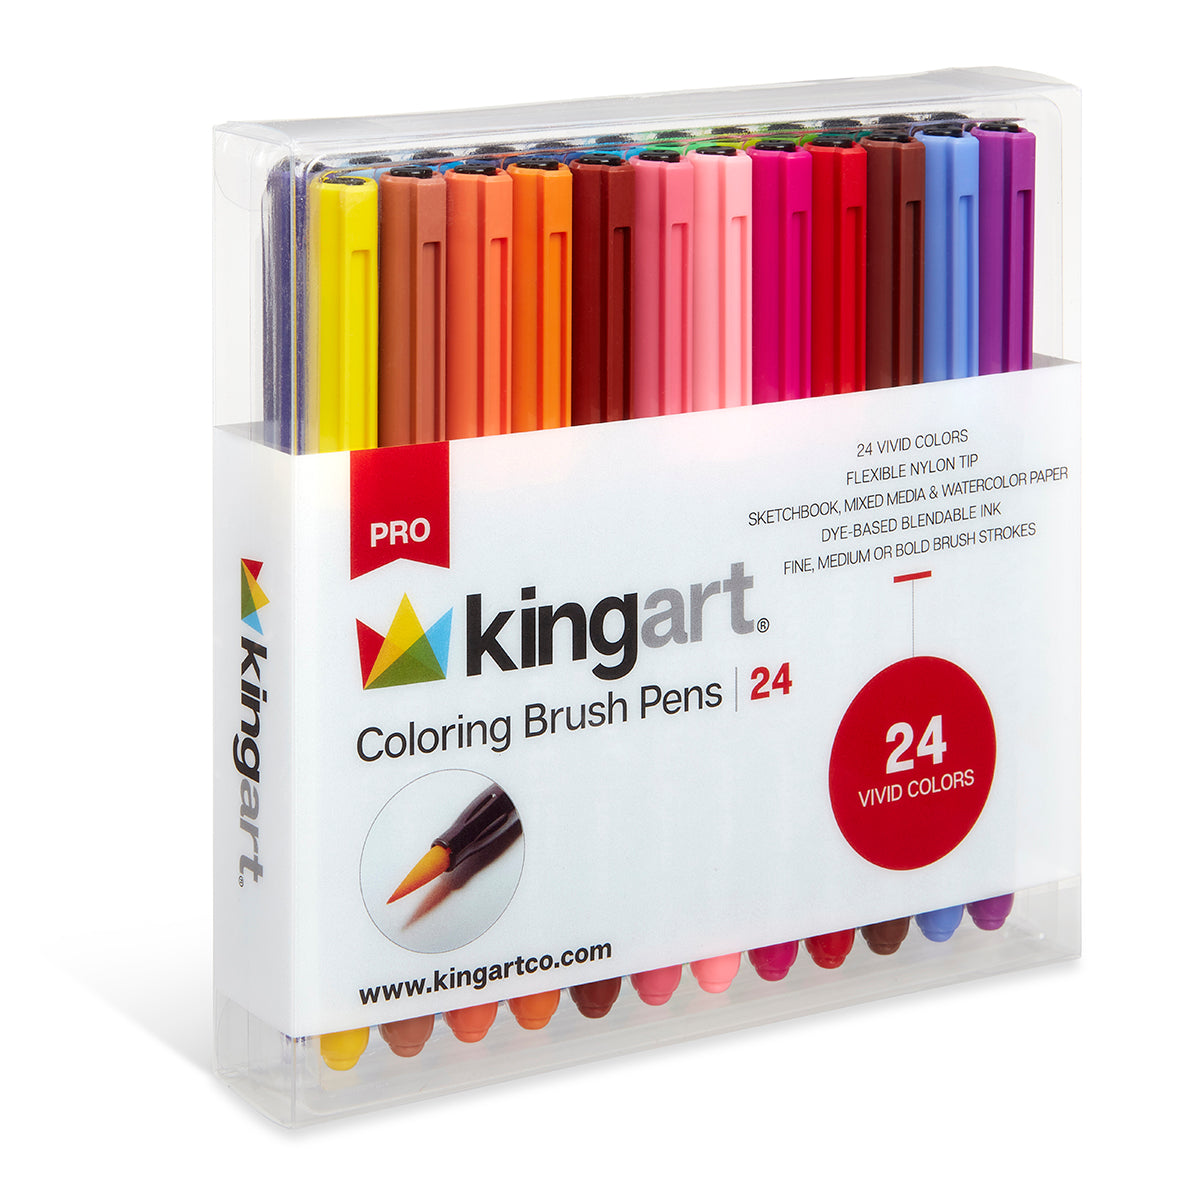 Kingart Studio Felt Tip Pens, Medium Point, Set 24 Unique Bright Colors